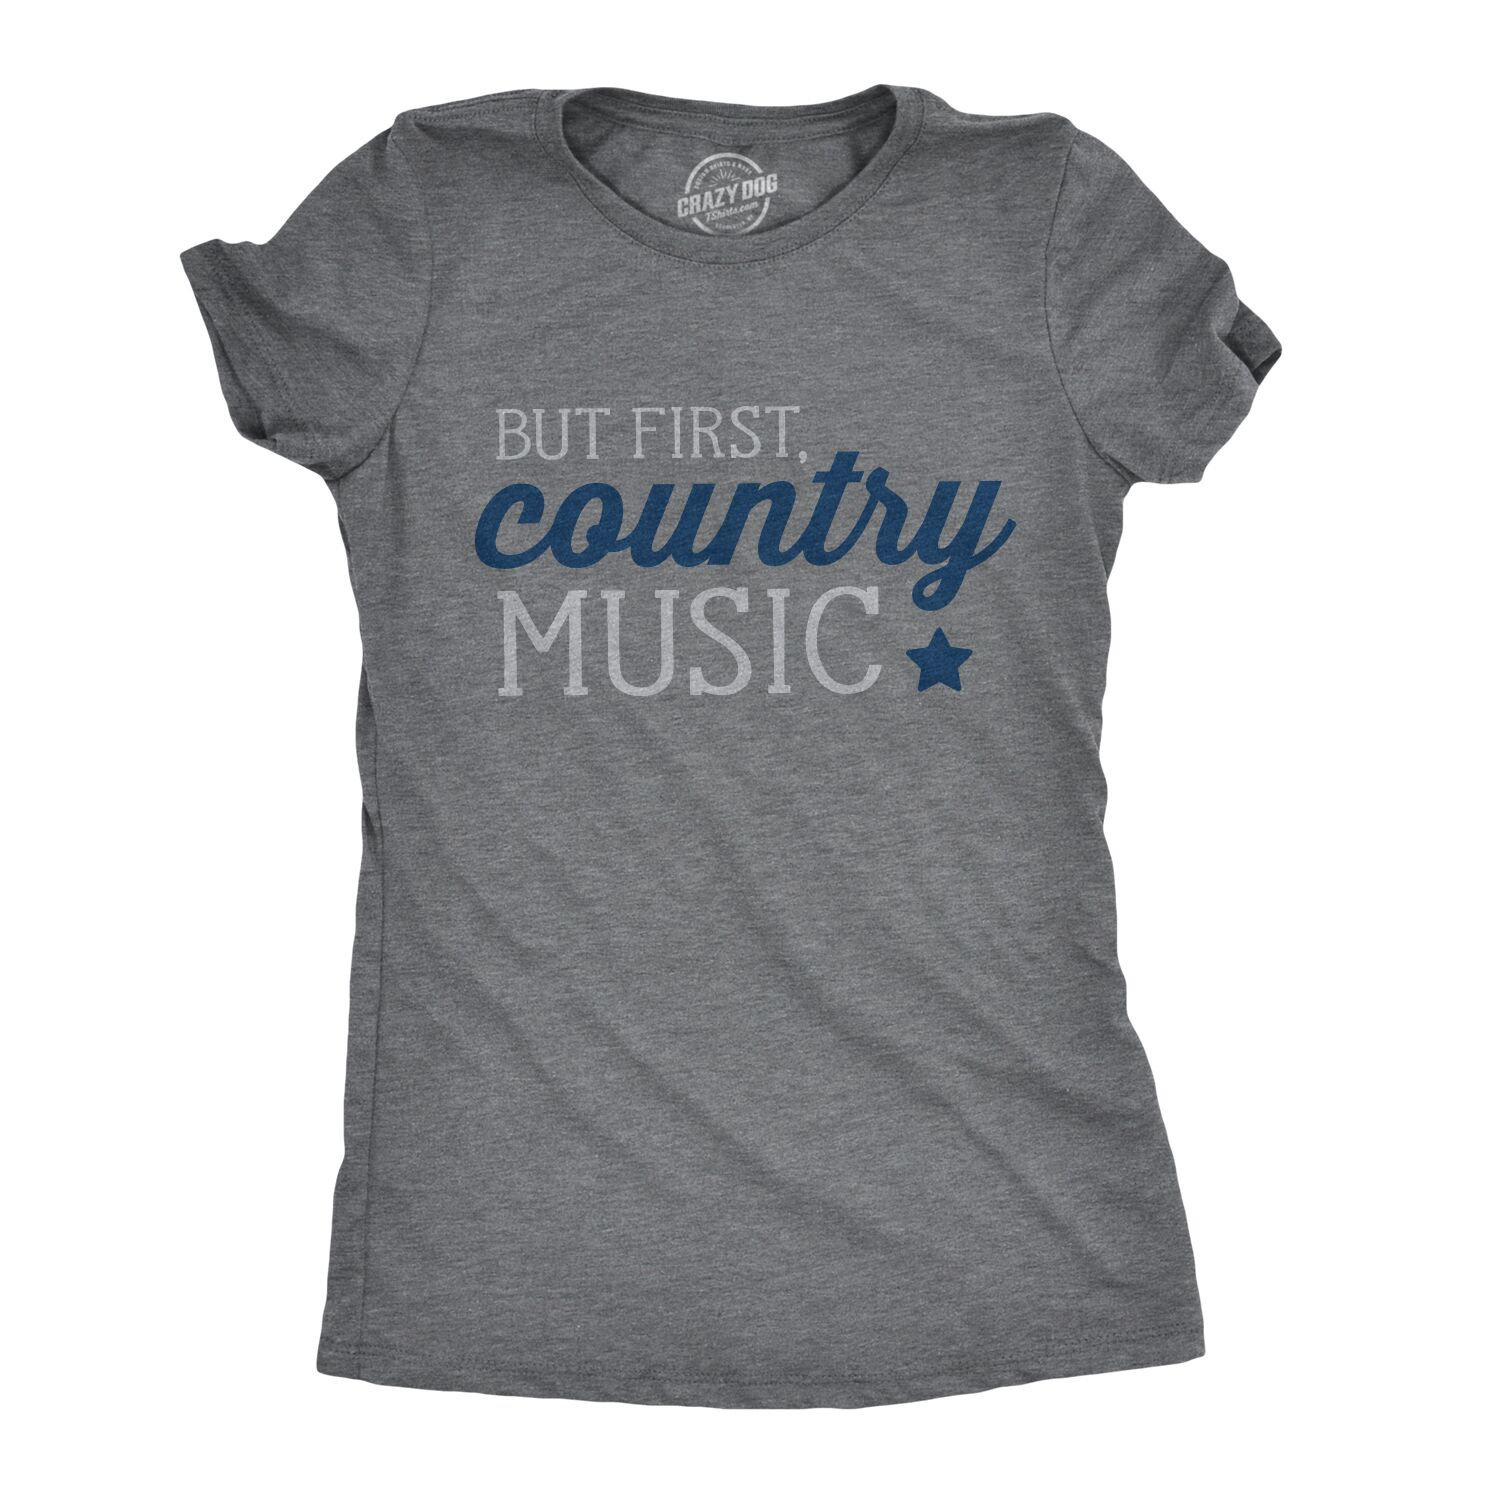 country music sayings